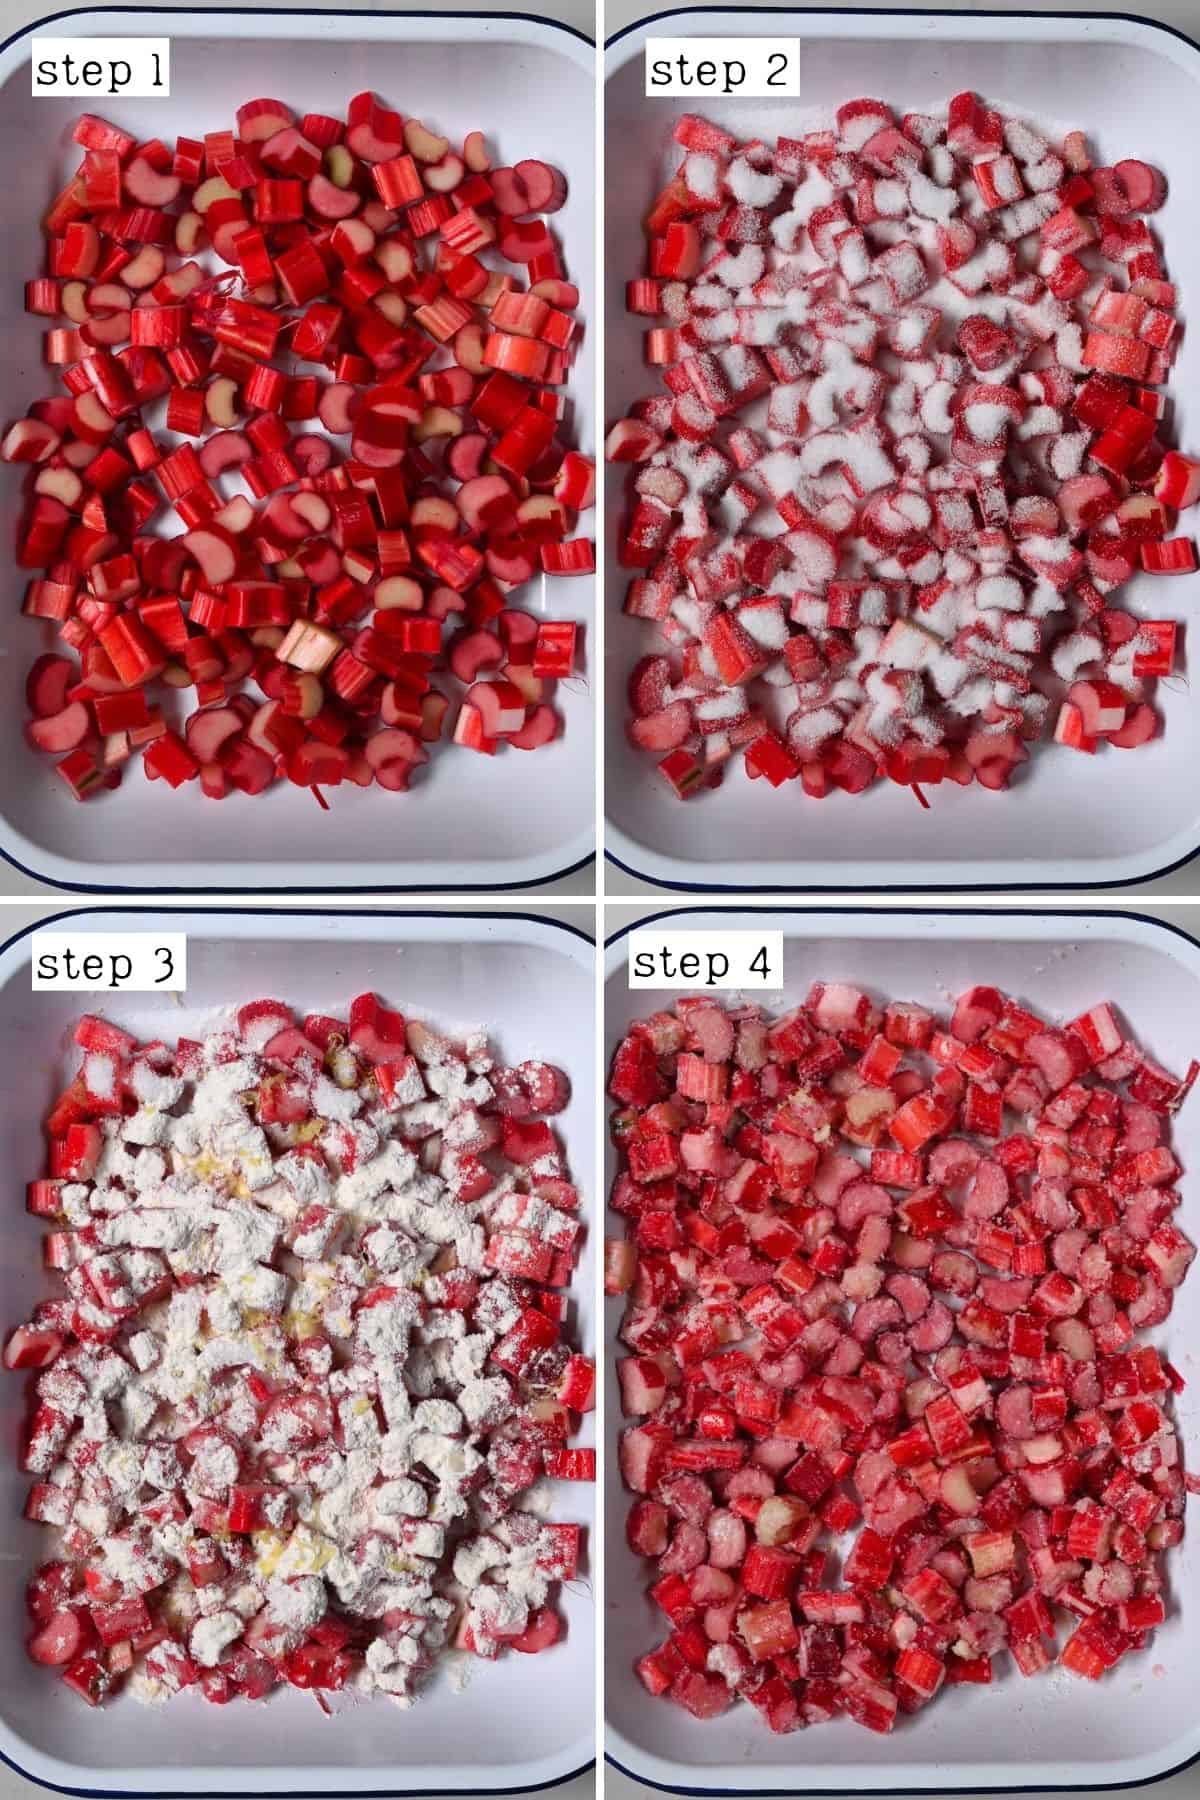 Steps for preparing rhubarb mixture